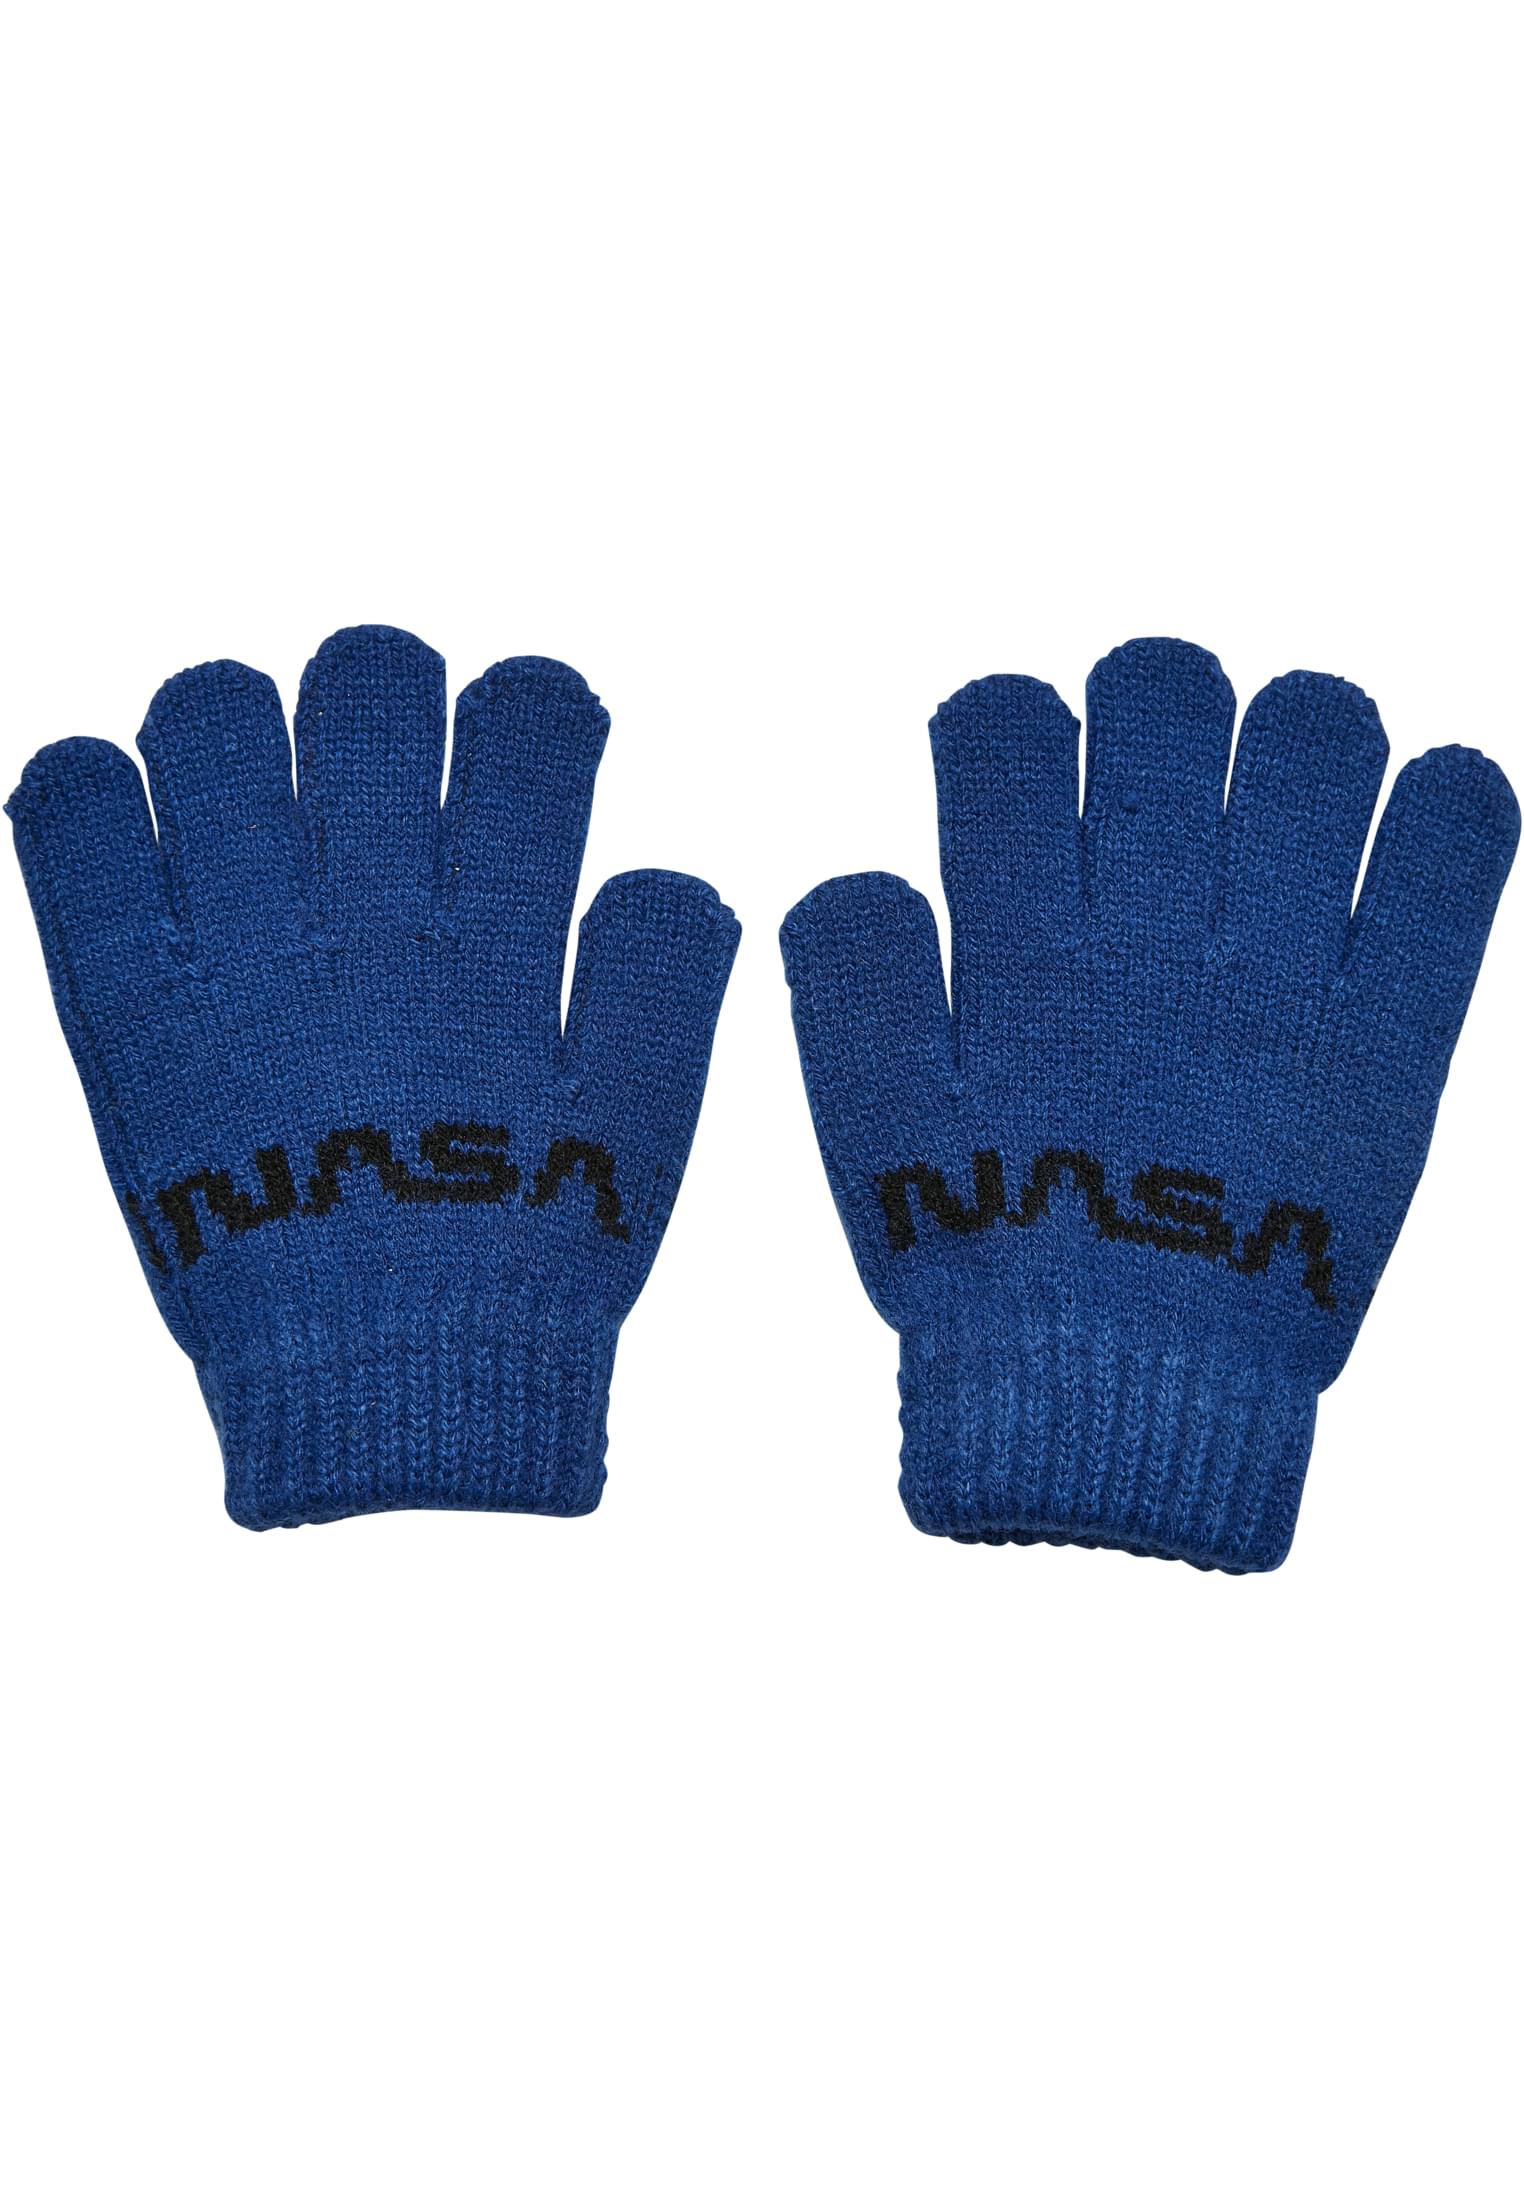 NASA Knit Glove Kids Royal 2540153-11631635